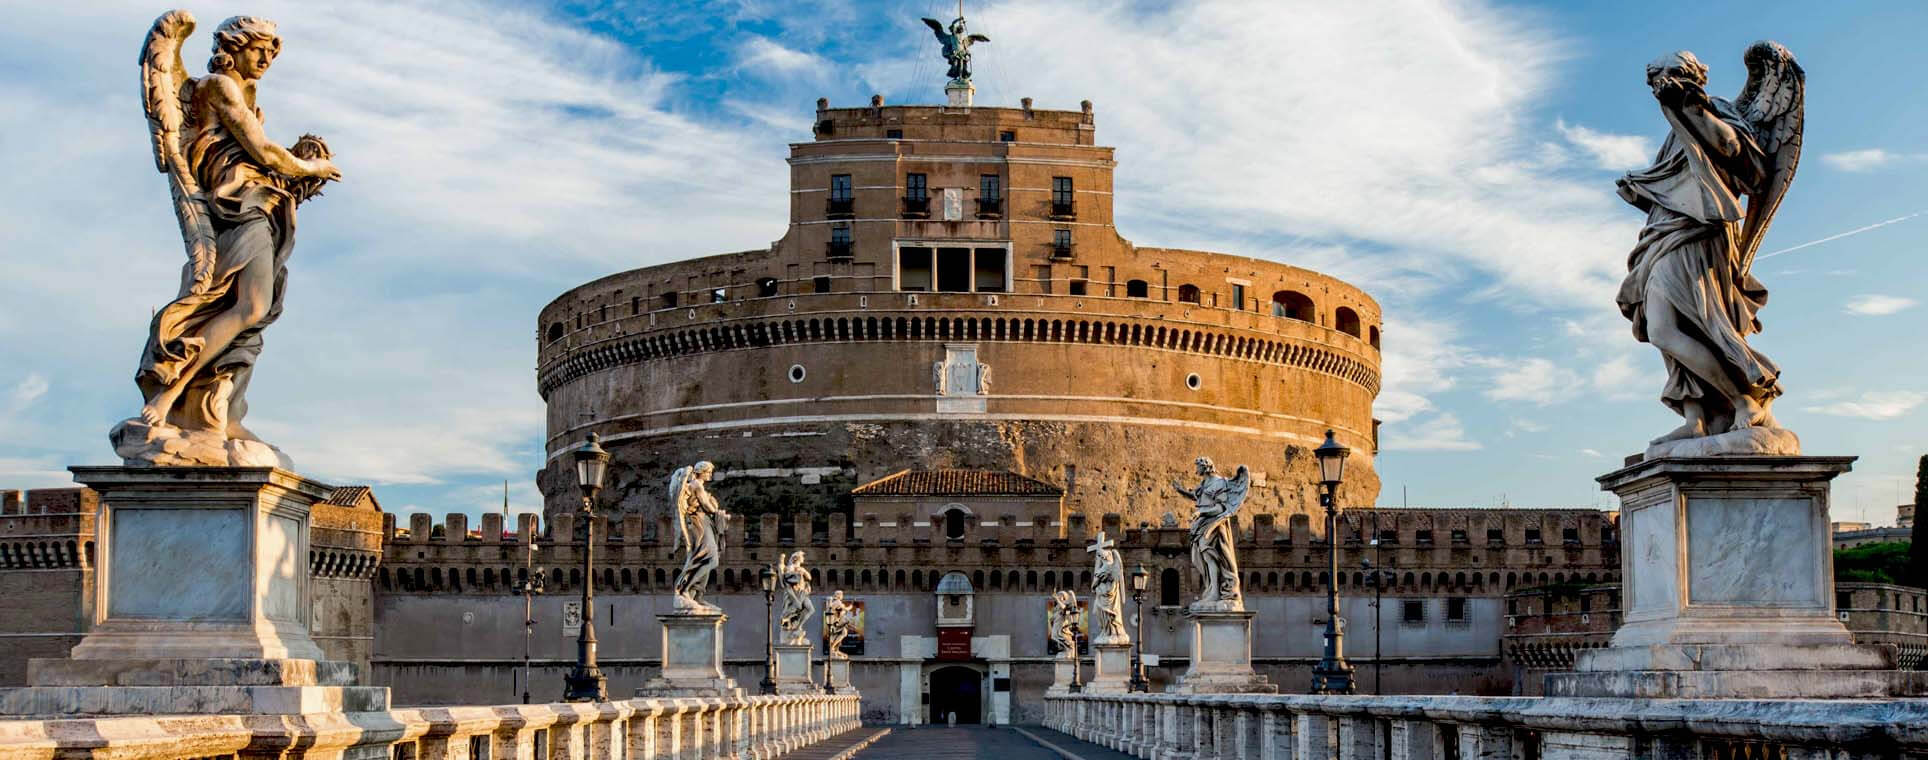 Vatican City Tourist Attractions